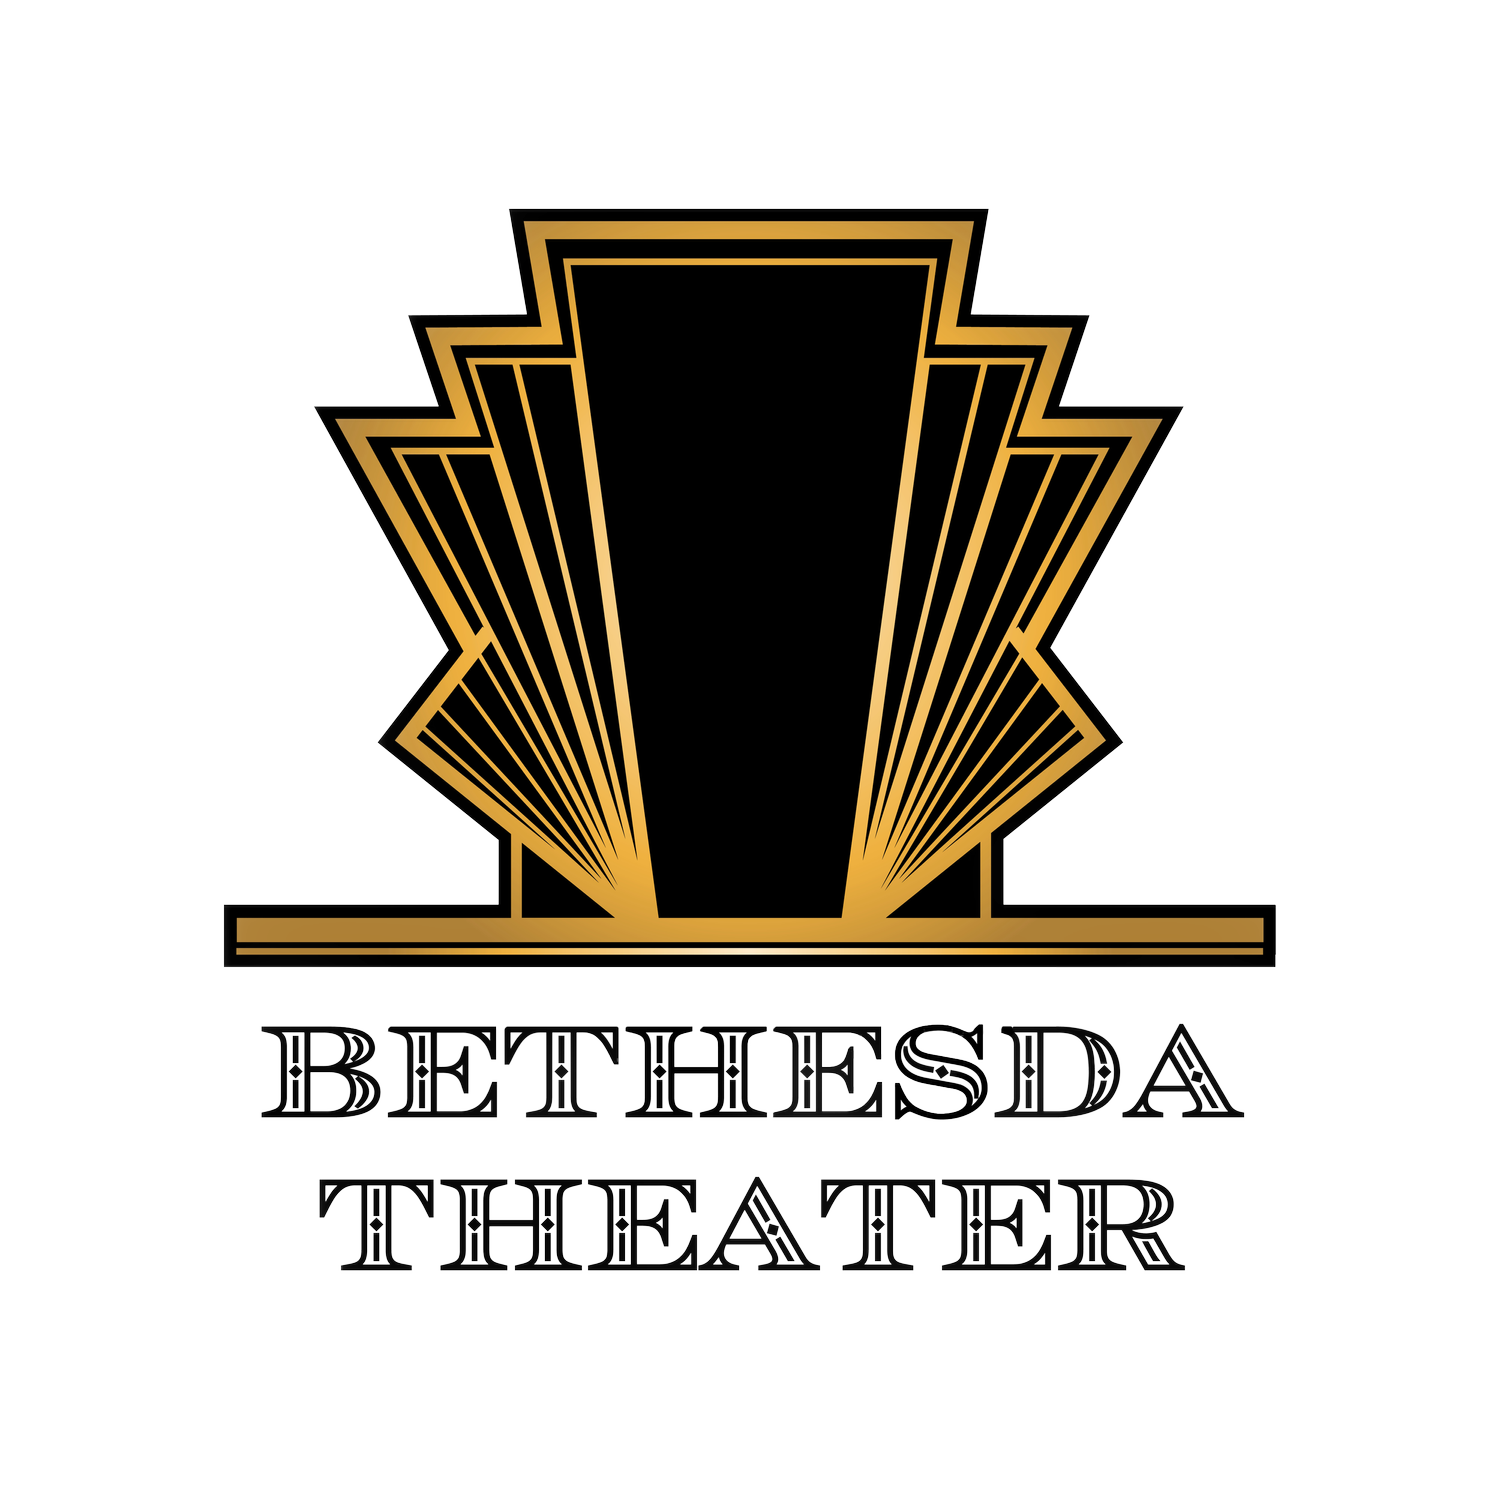 Bethesda Theater